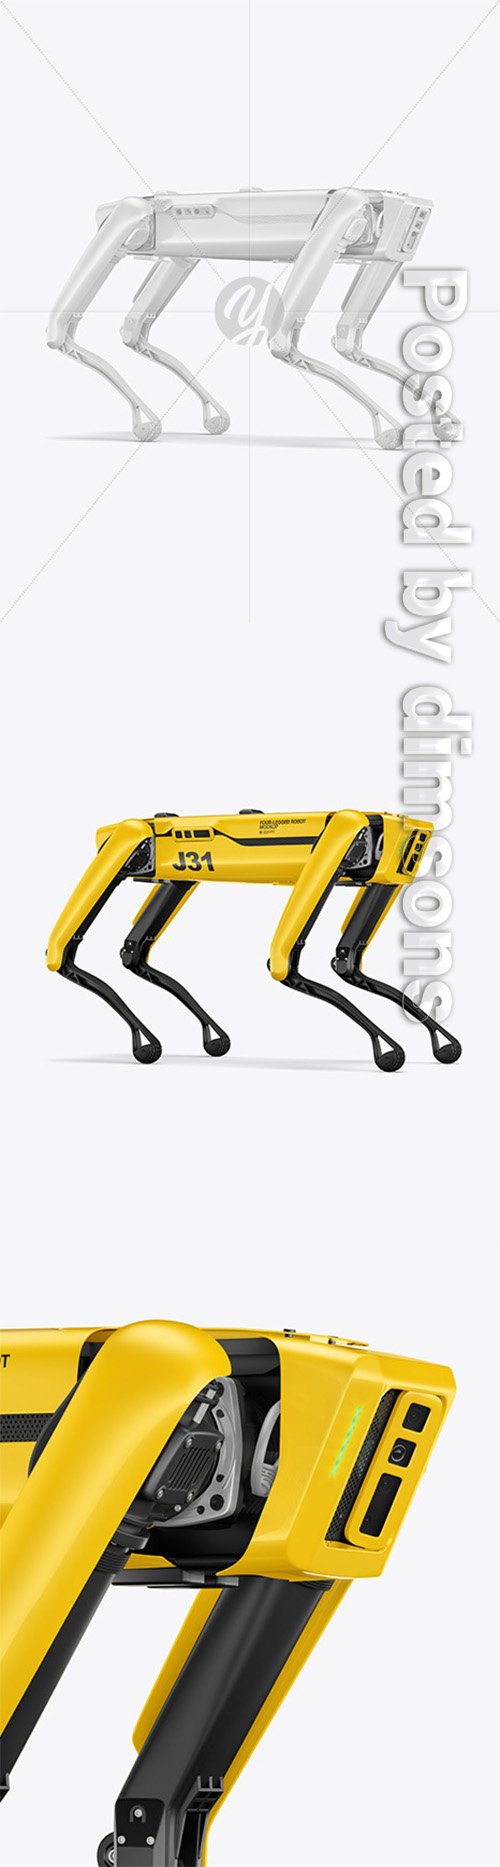 Four-Legged Robot Mockup 66077 TIF